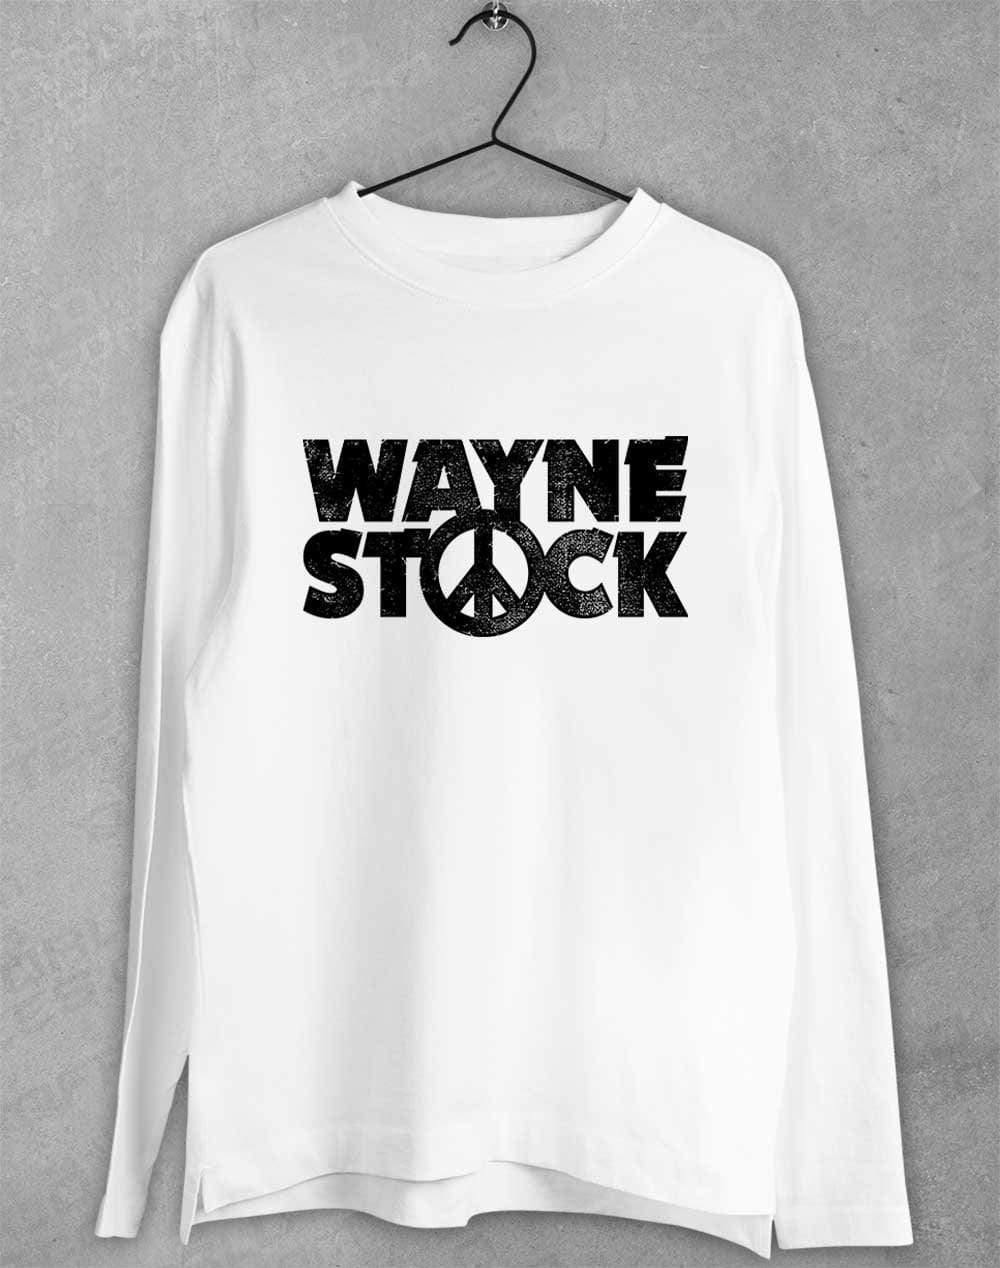 Waynestock Long Sleeve T-Shirt S / White  - Off World Tees